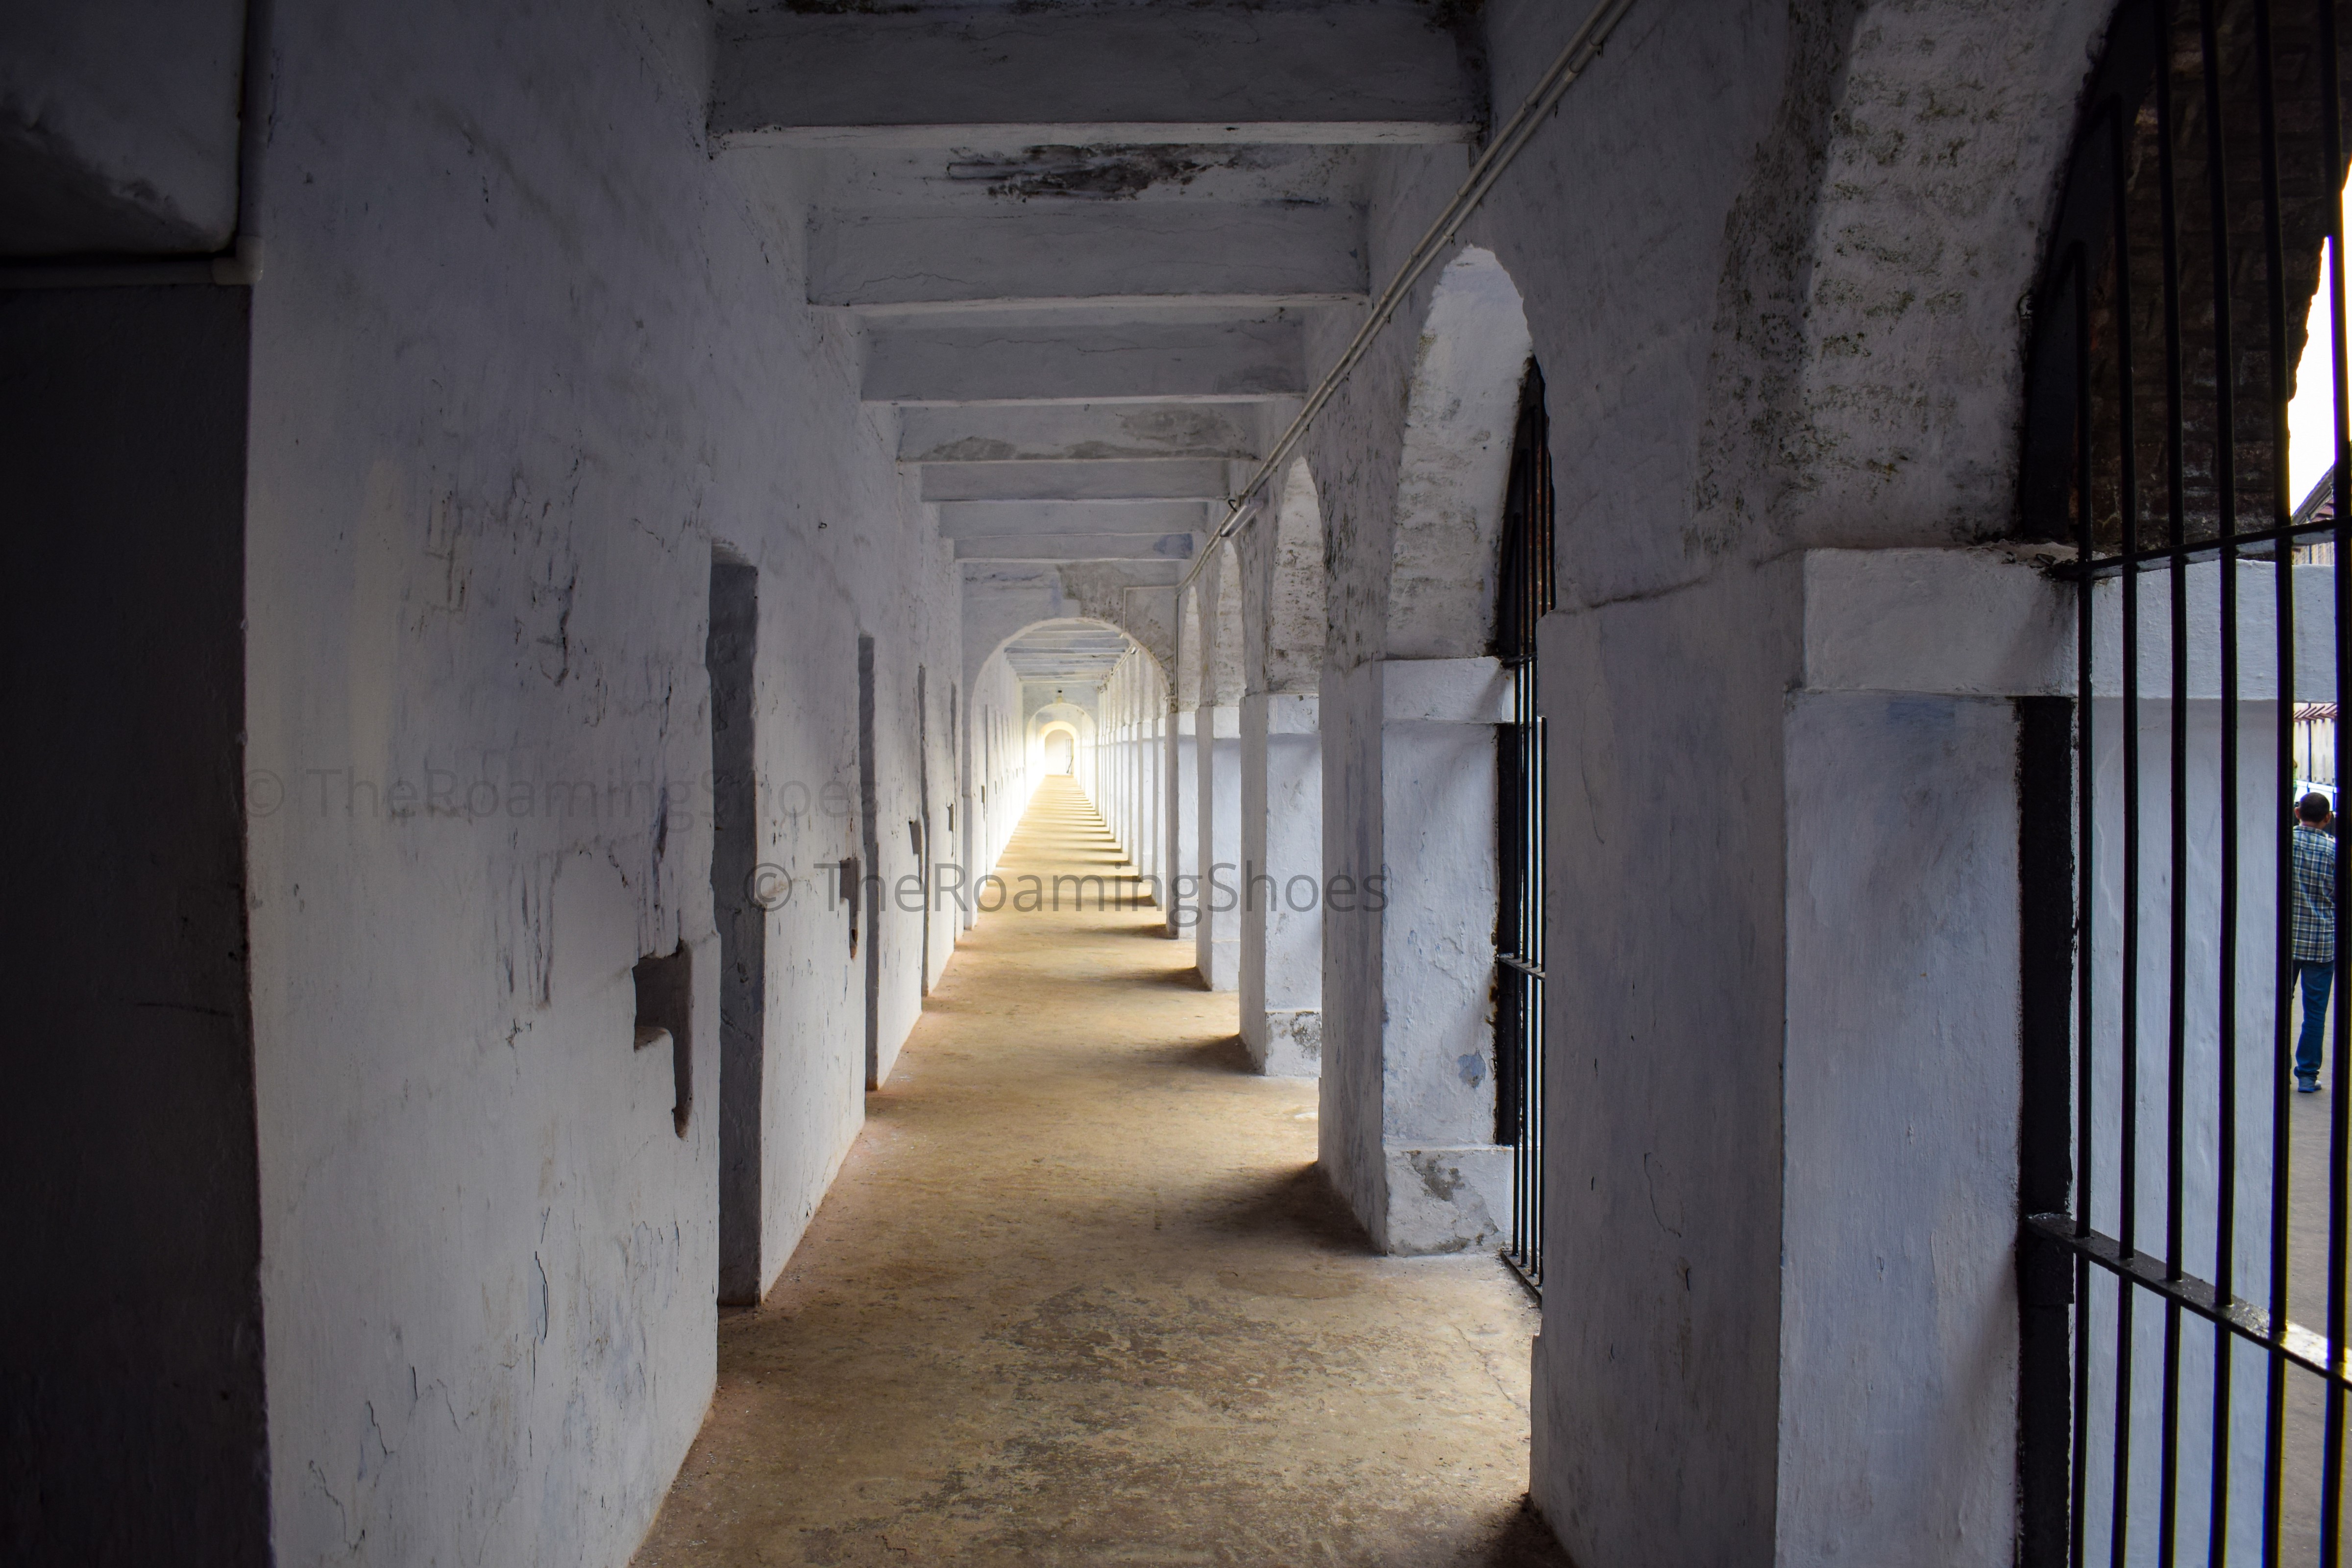 Corridors of Cellular Jail